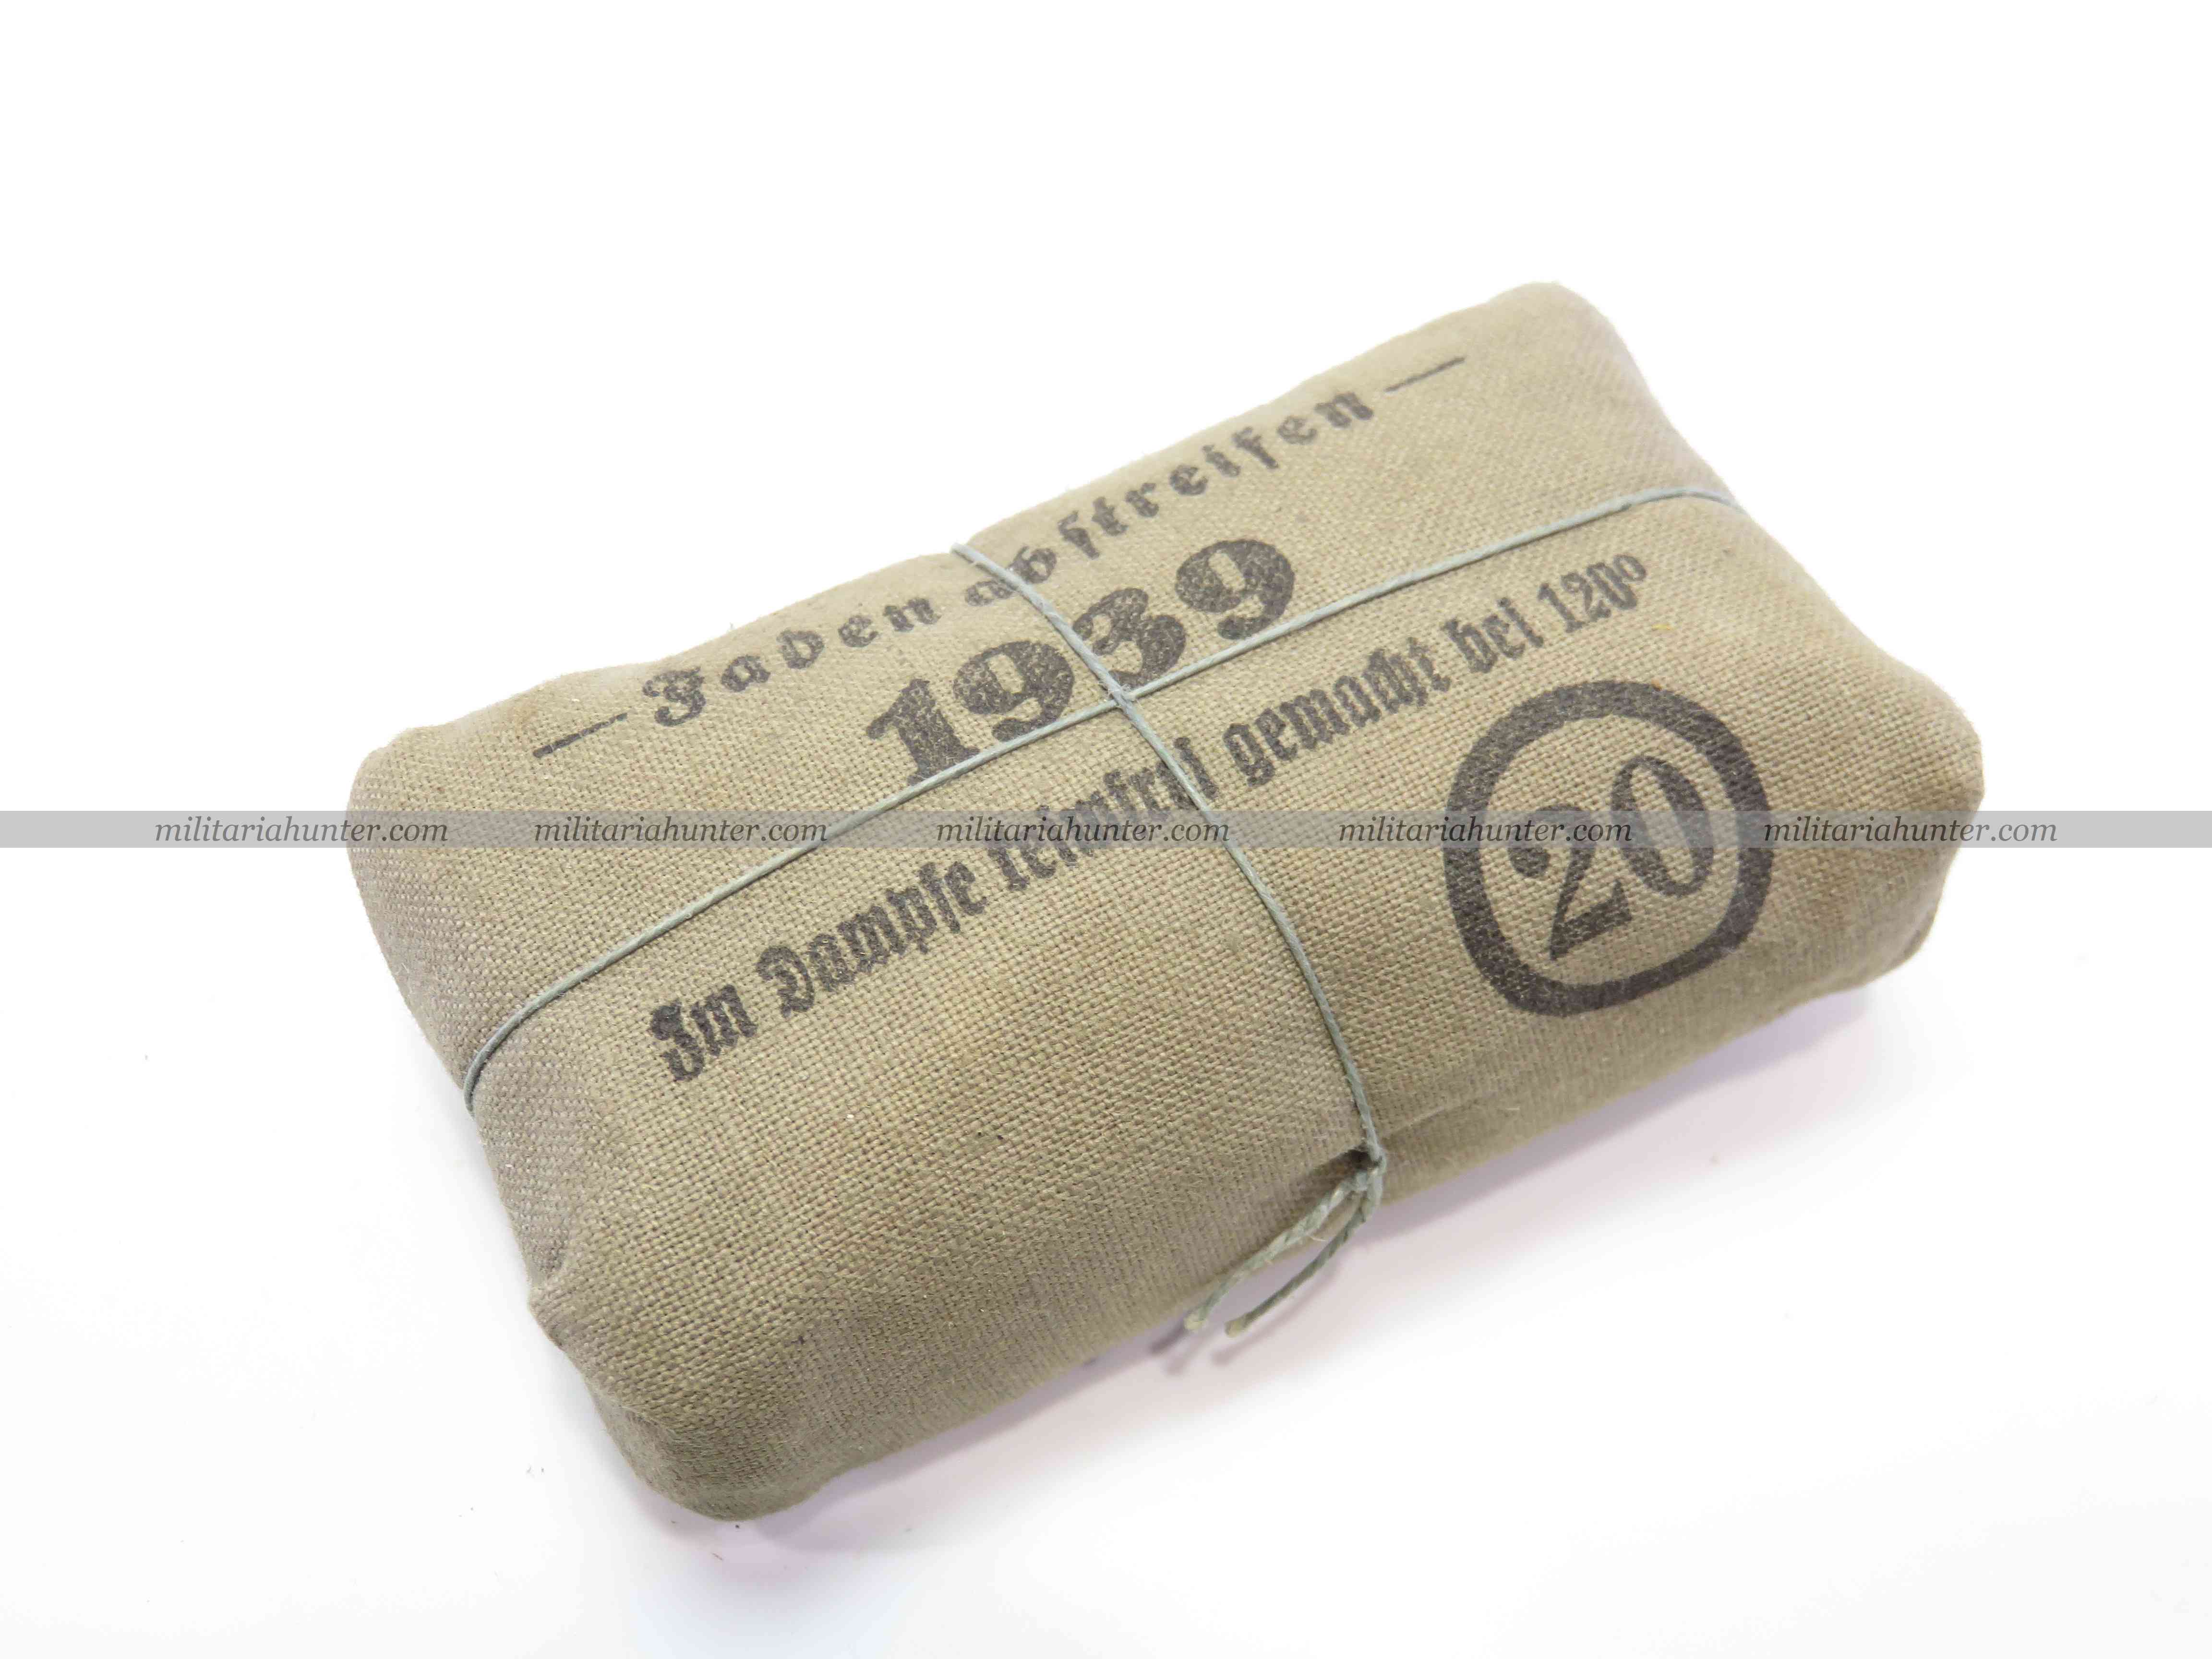 militaria : WW2 german field medical dressing - 1939 - pansement allemand